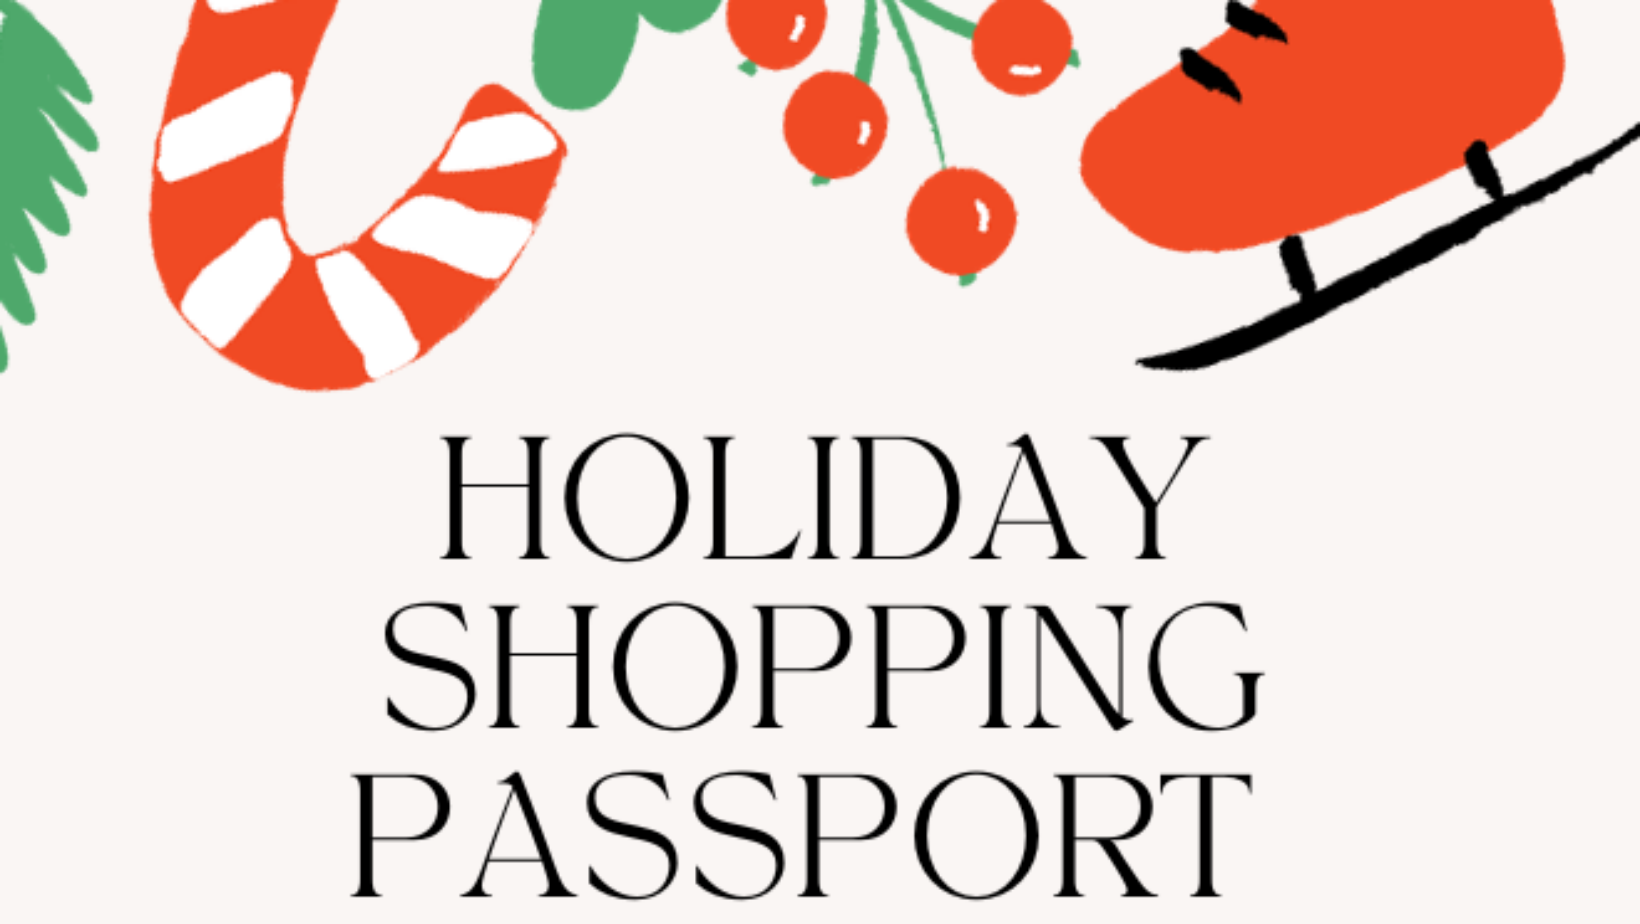 Passportage Holiday Shopping Calendar Default